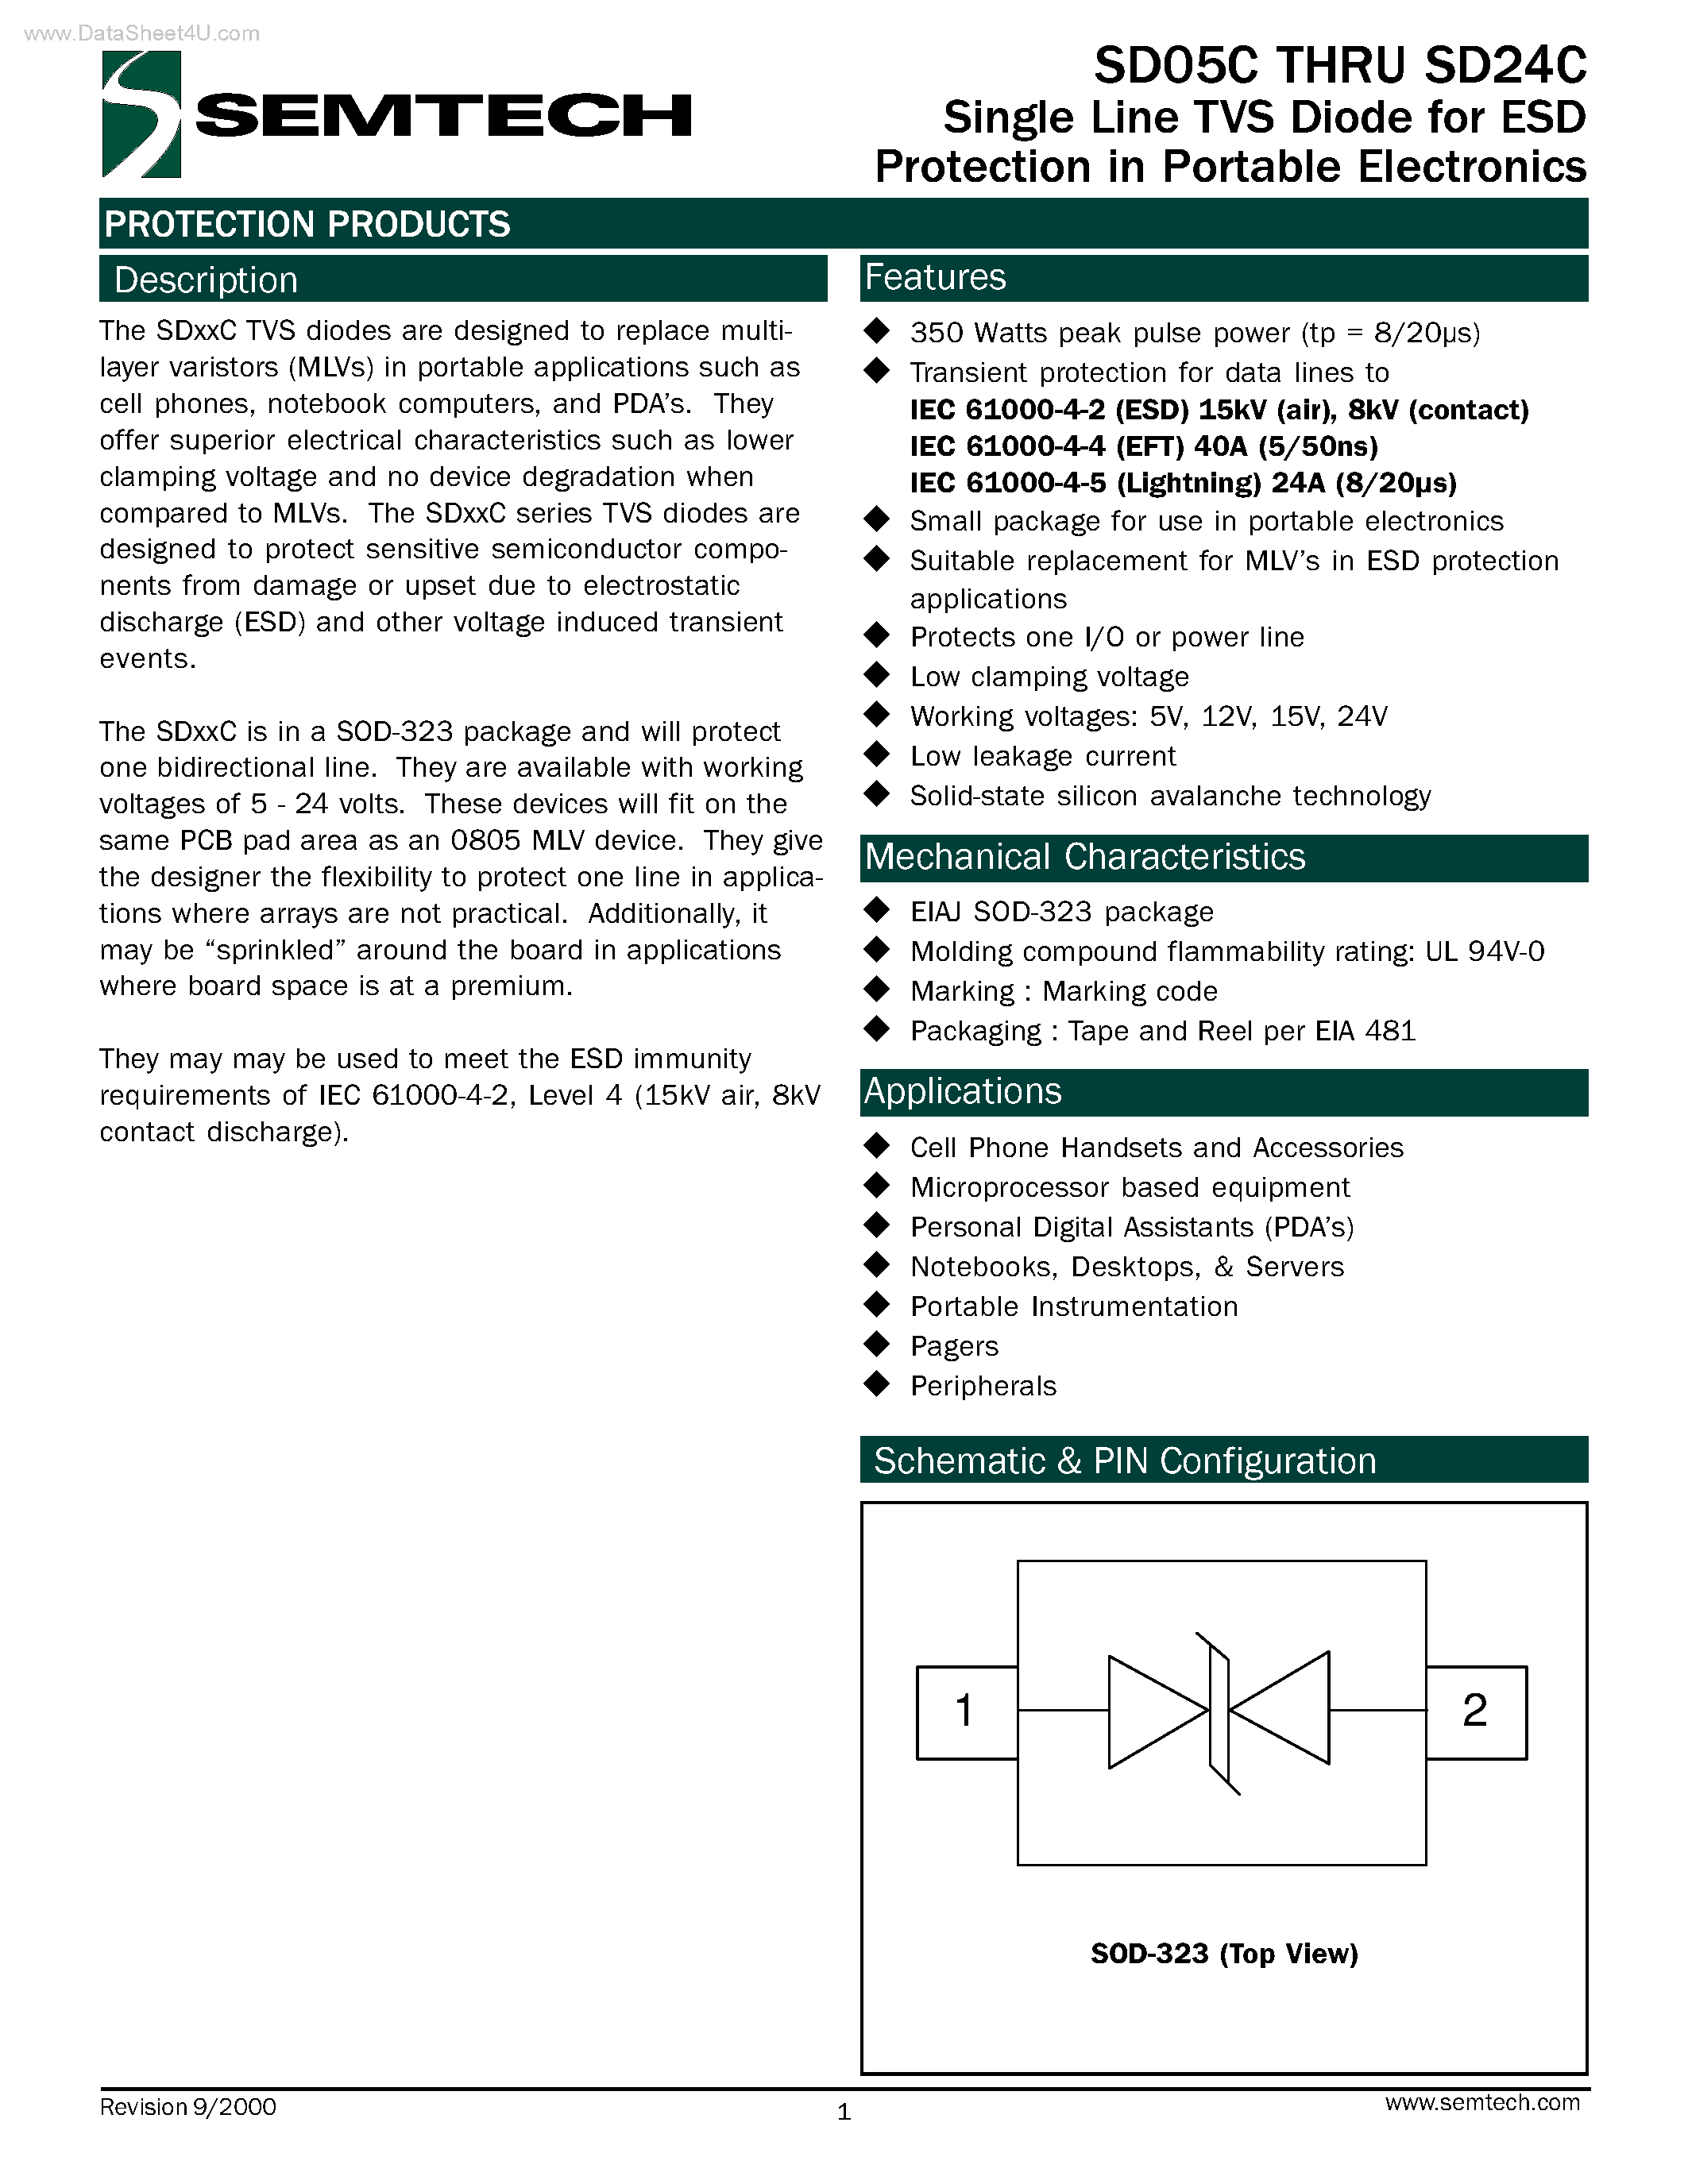 Datasheet SD12C - (SD05C - SD24C) Single Line TVS Diode page 1